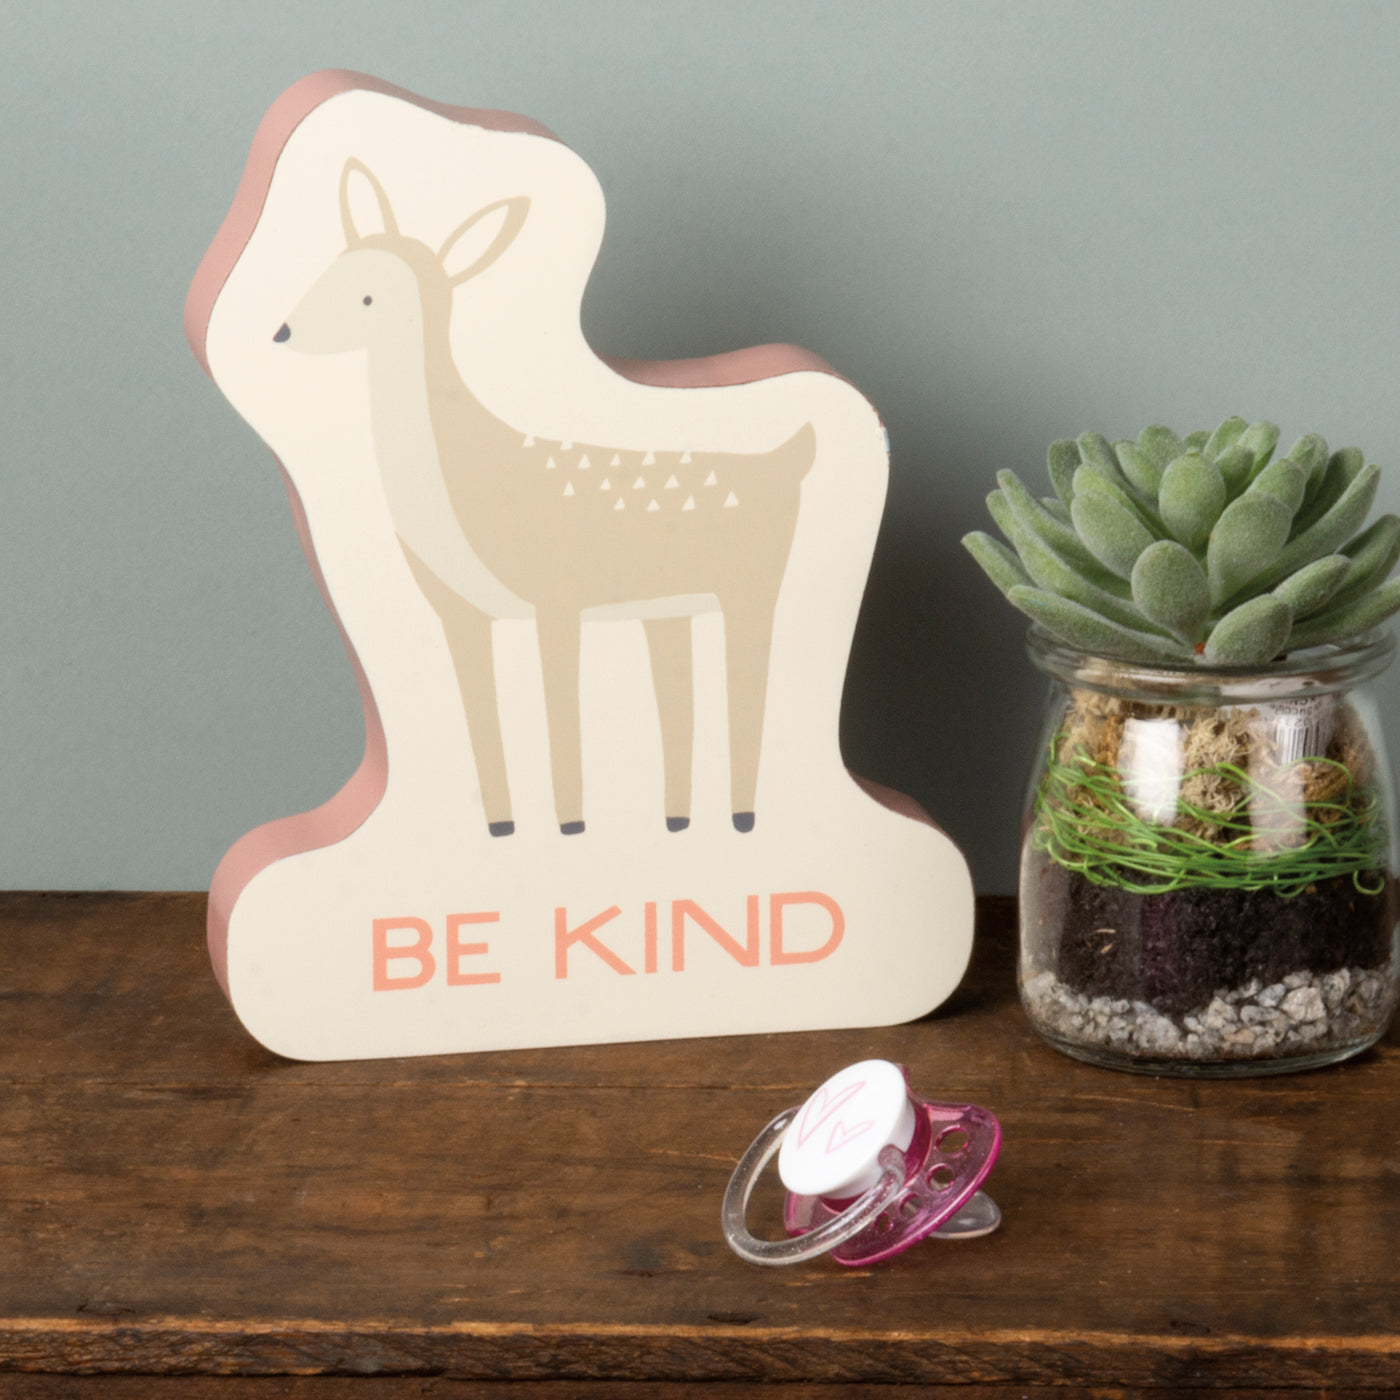 Be Kind Cutout Deer Sitter Sign